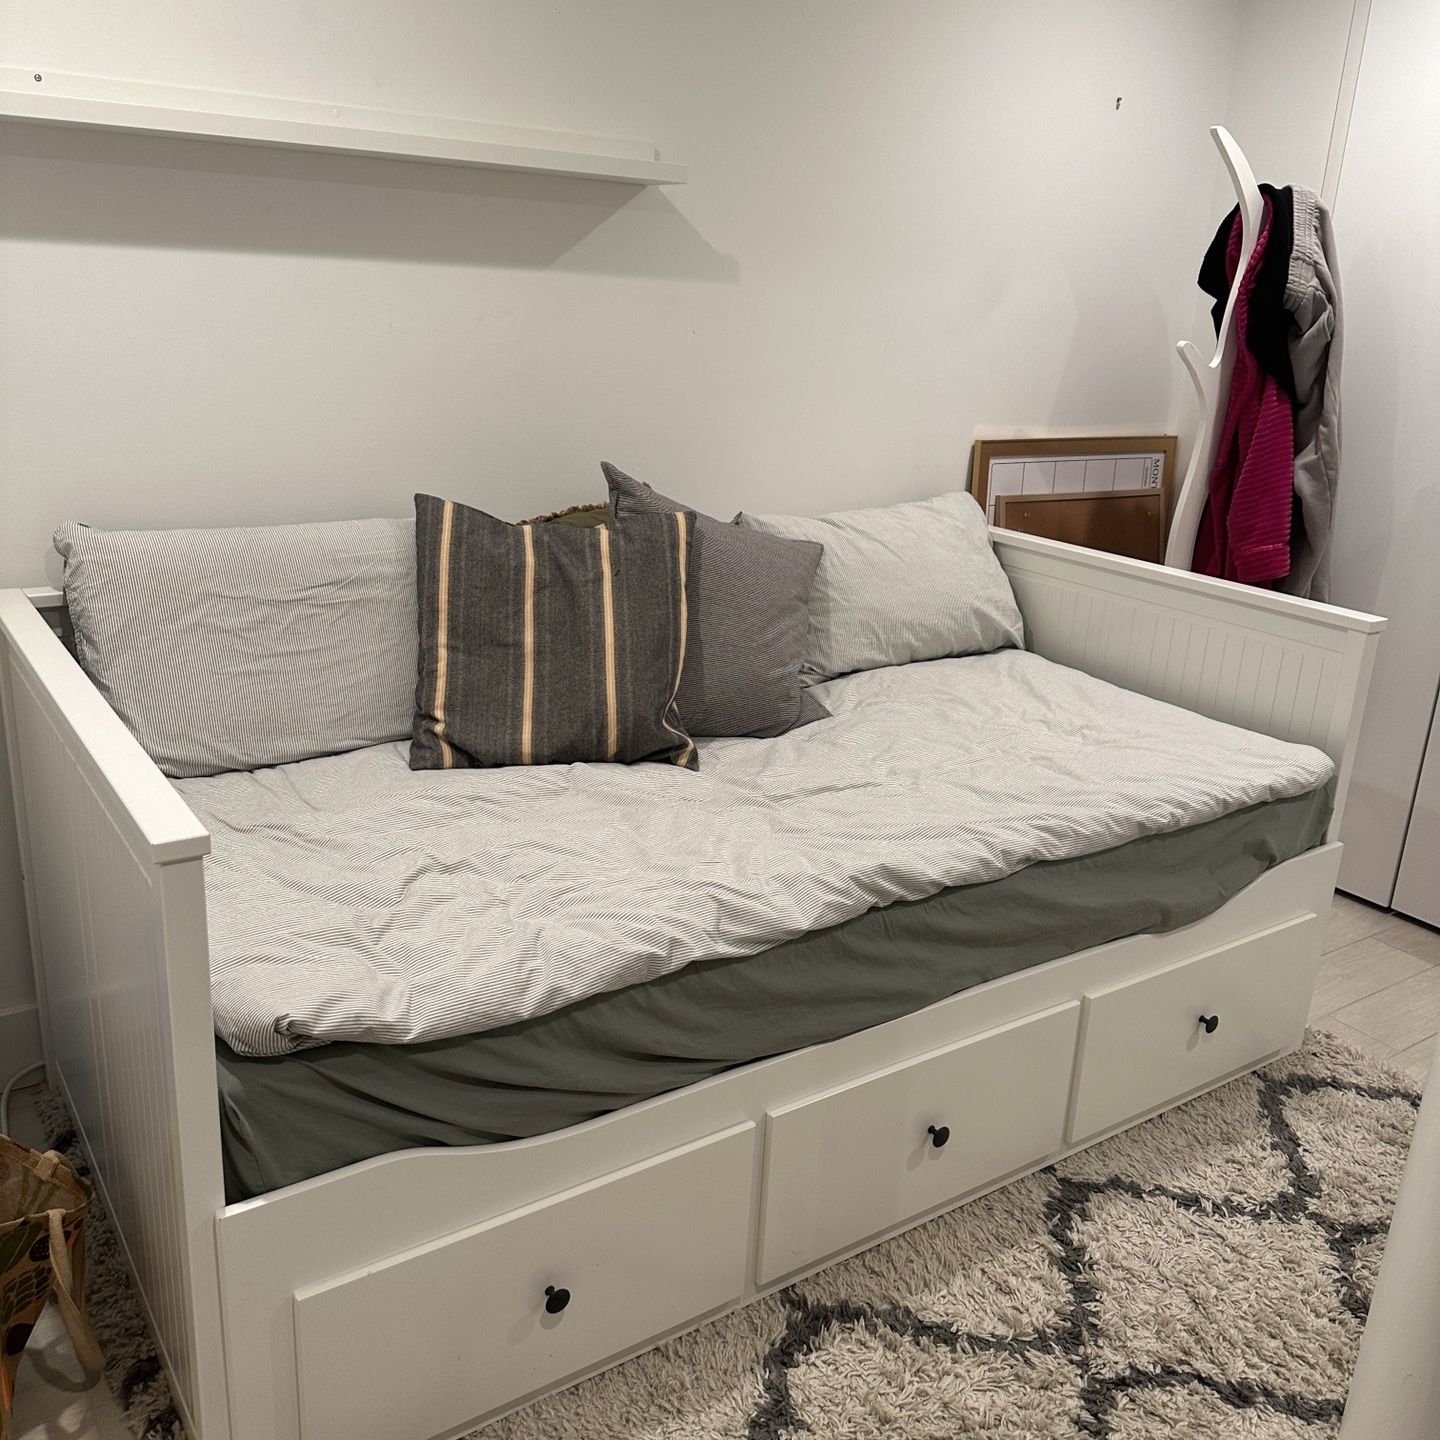 IKEA HEMNES Daybed and Dresser - Kids/Guest Bedroom Set